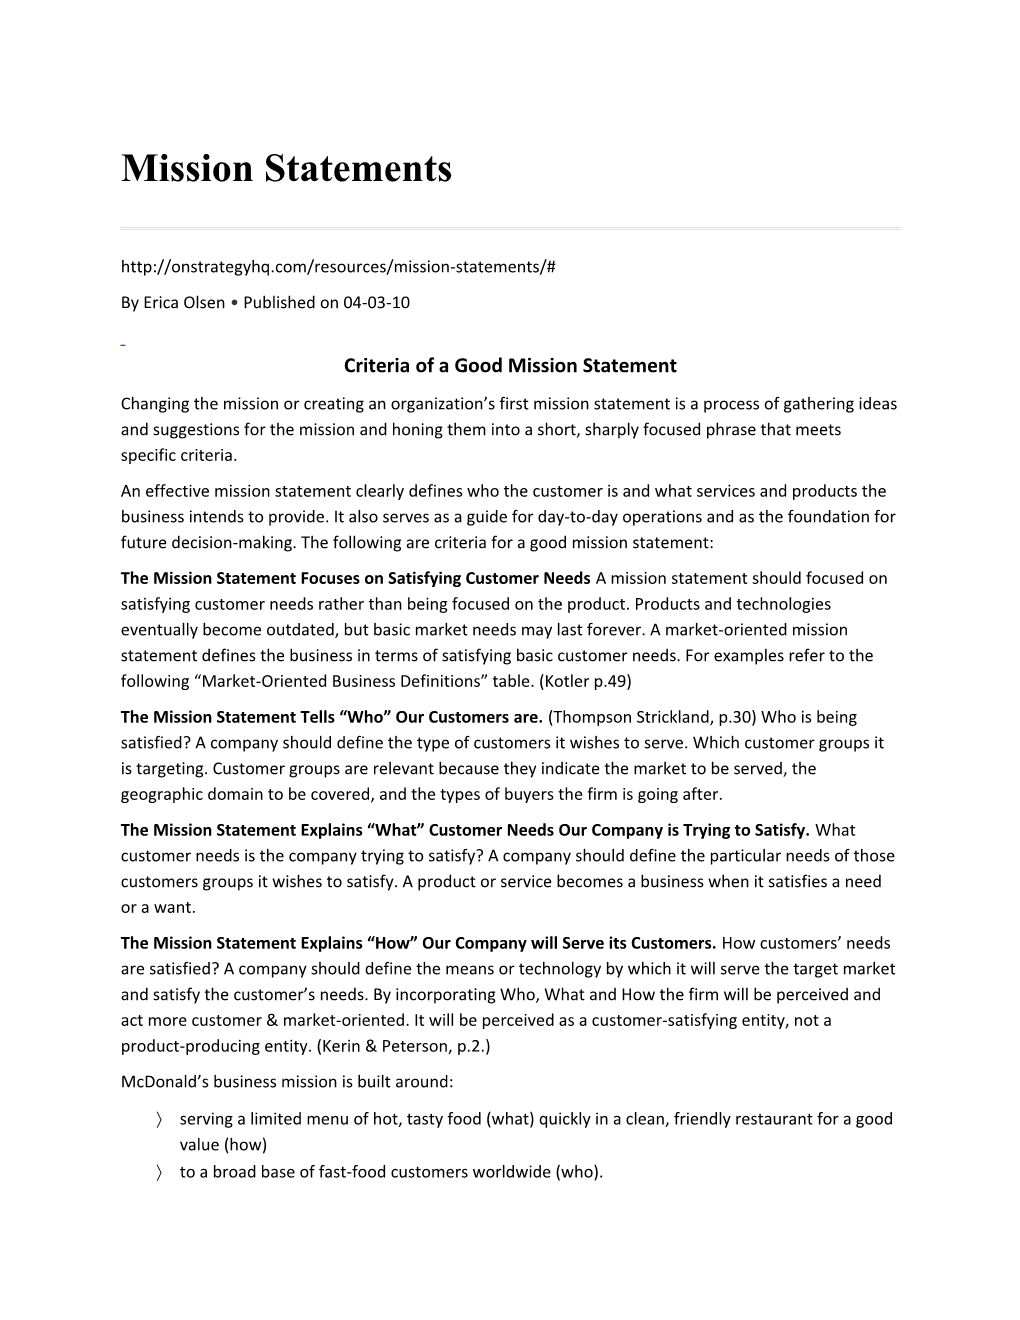 Criteria of a Good Mission Statement